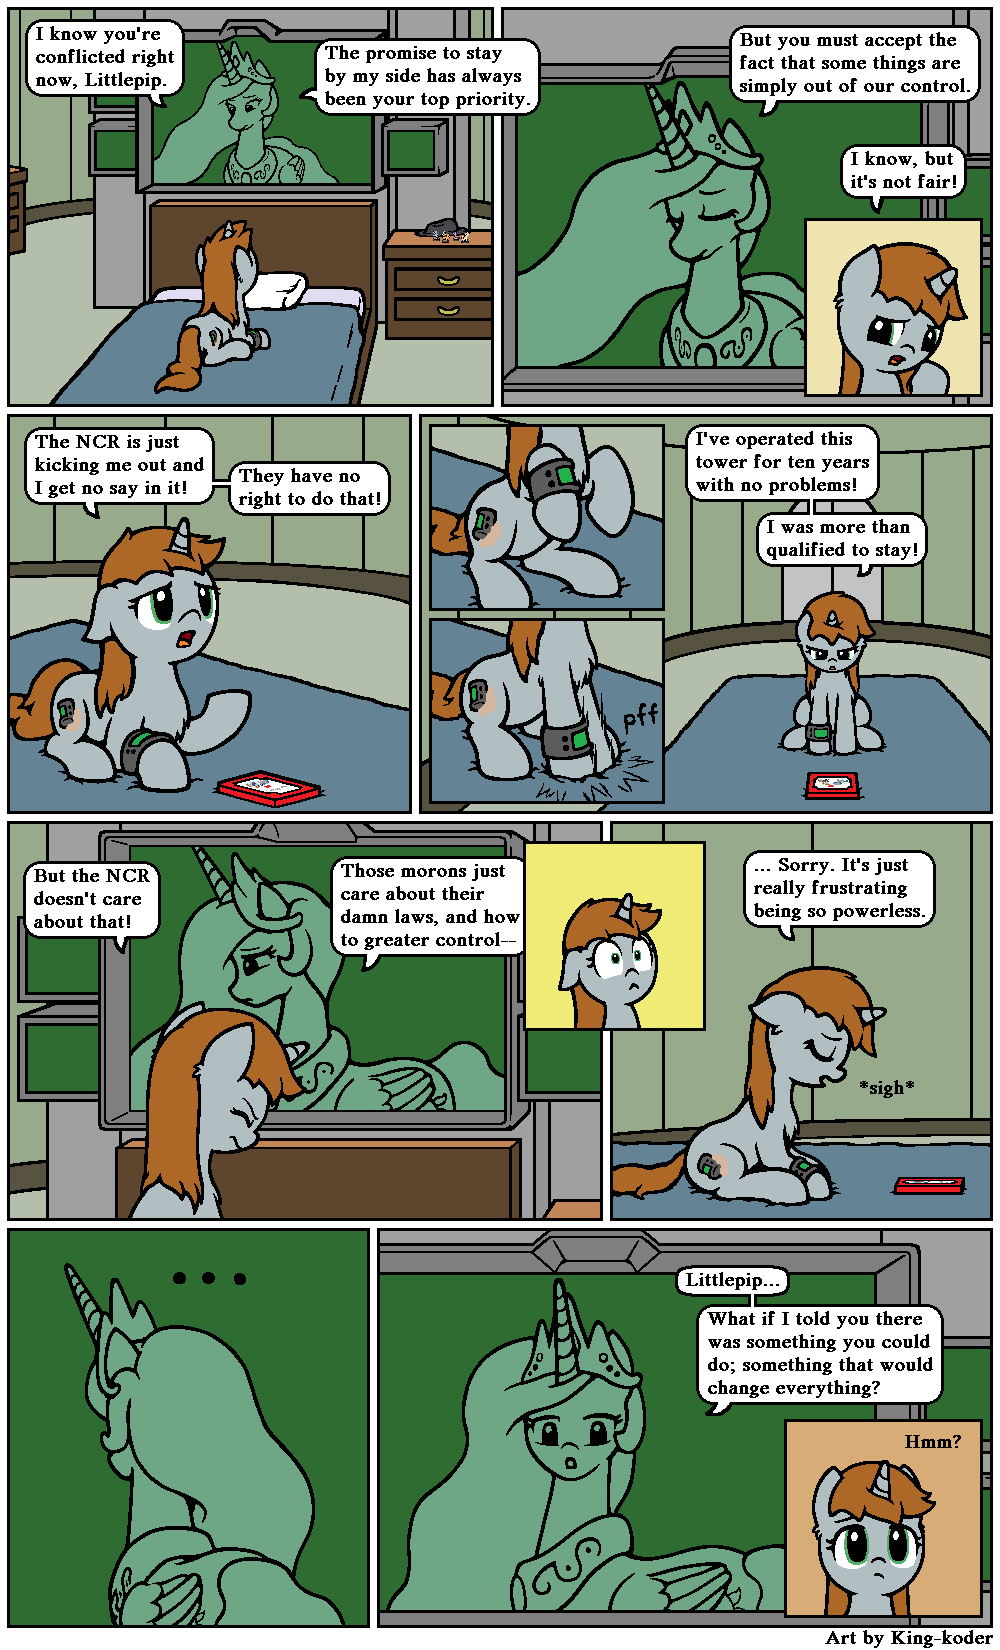 Post-Fallout Equestria : Episode2 Page22